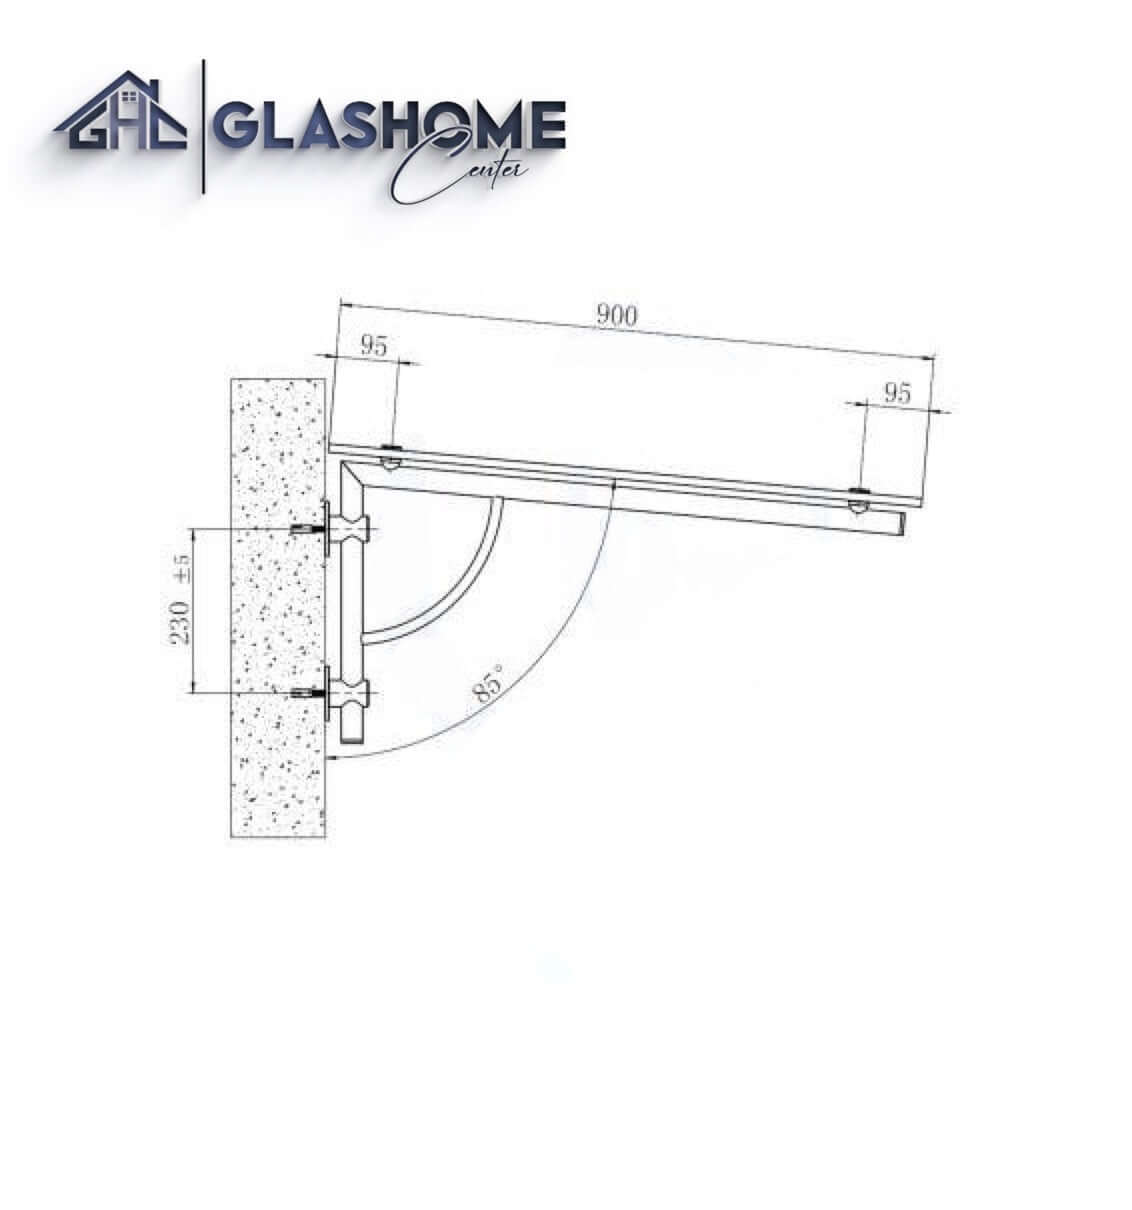 GlasHomeCenter - glass canopy - Clear glass - 200x90cm - 13.1mm VSG - incl. 2 Edelstahlhalterungen Variant "Athens"